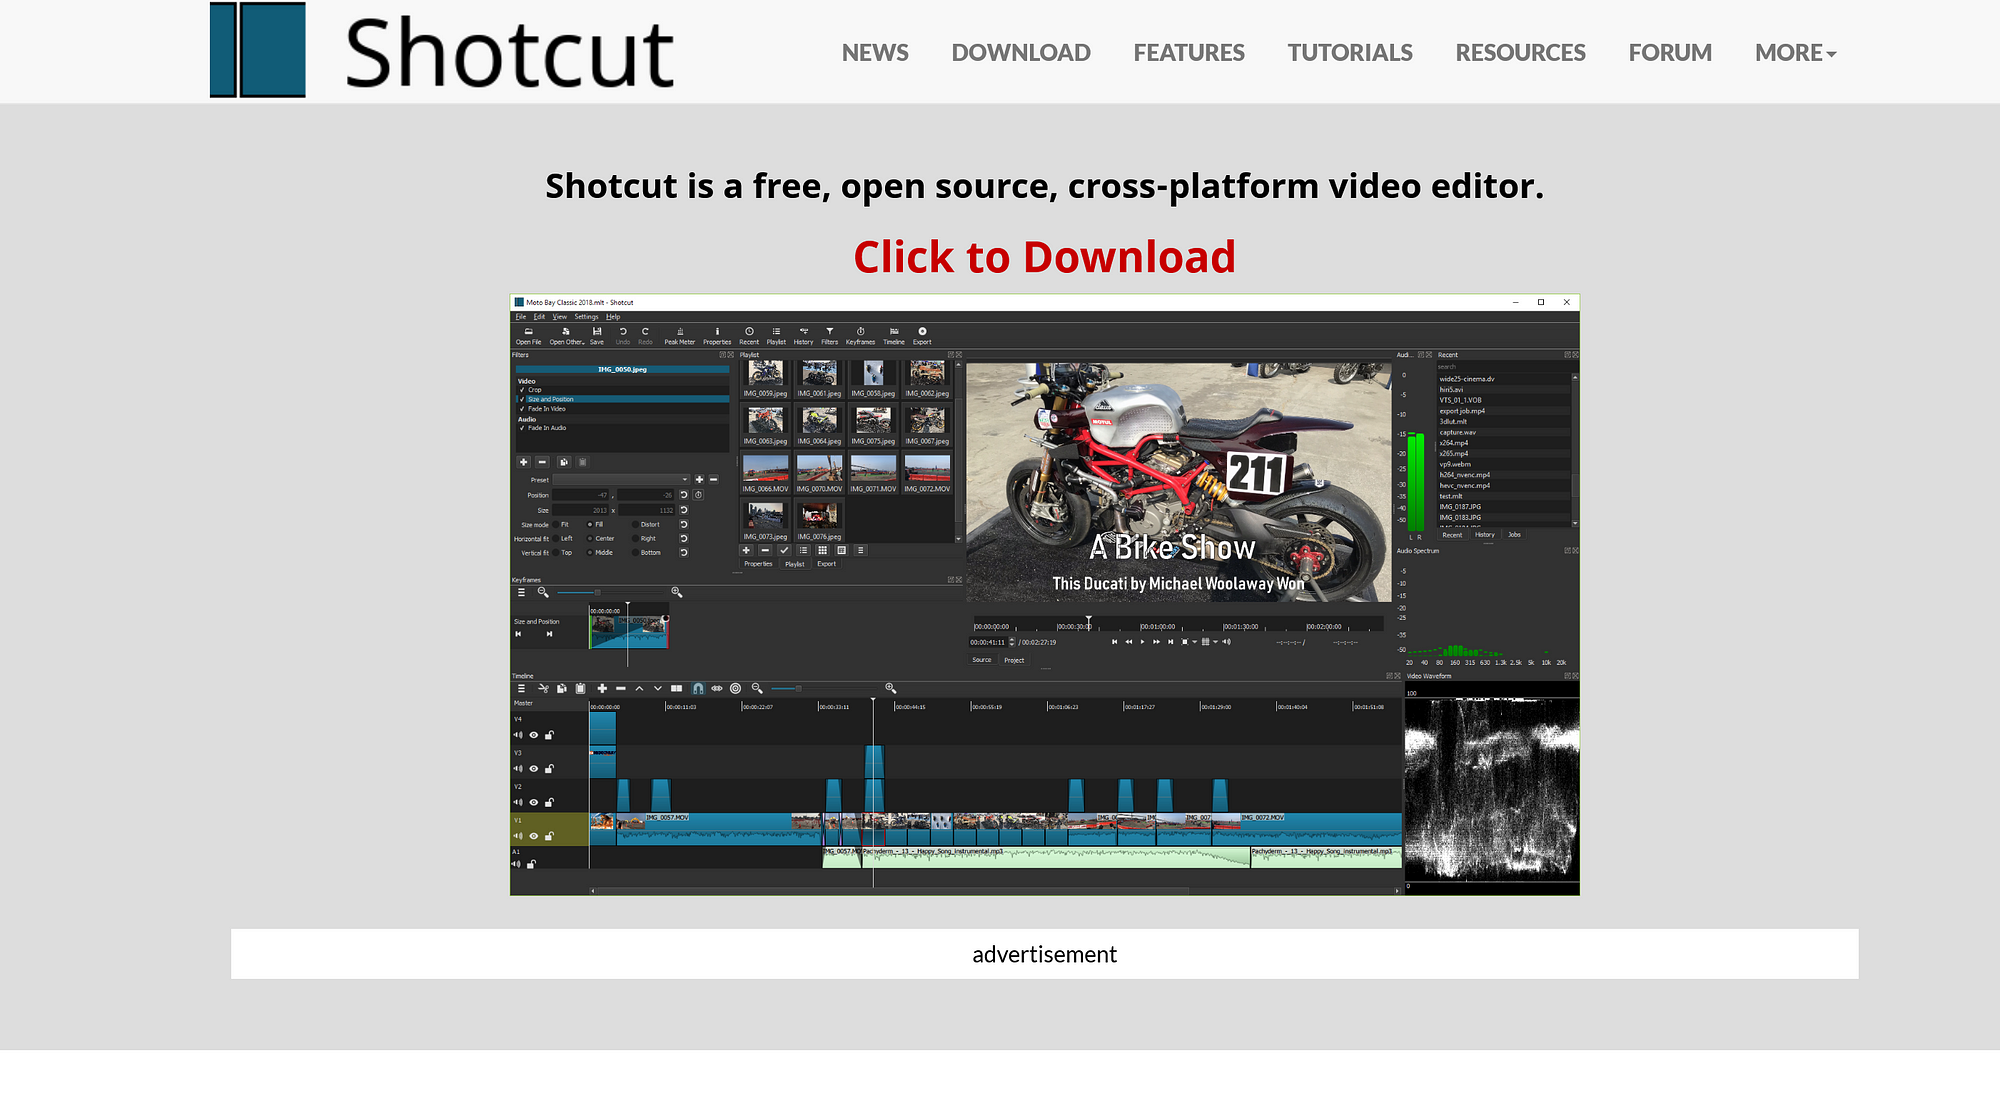 openshot video editor unusable